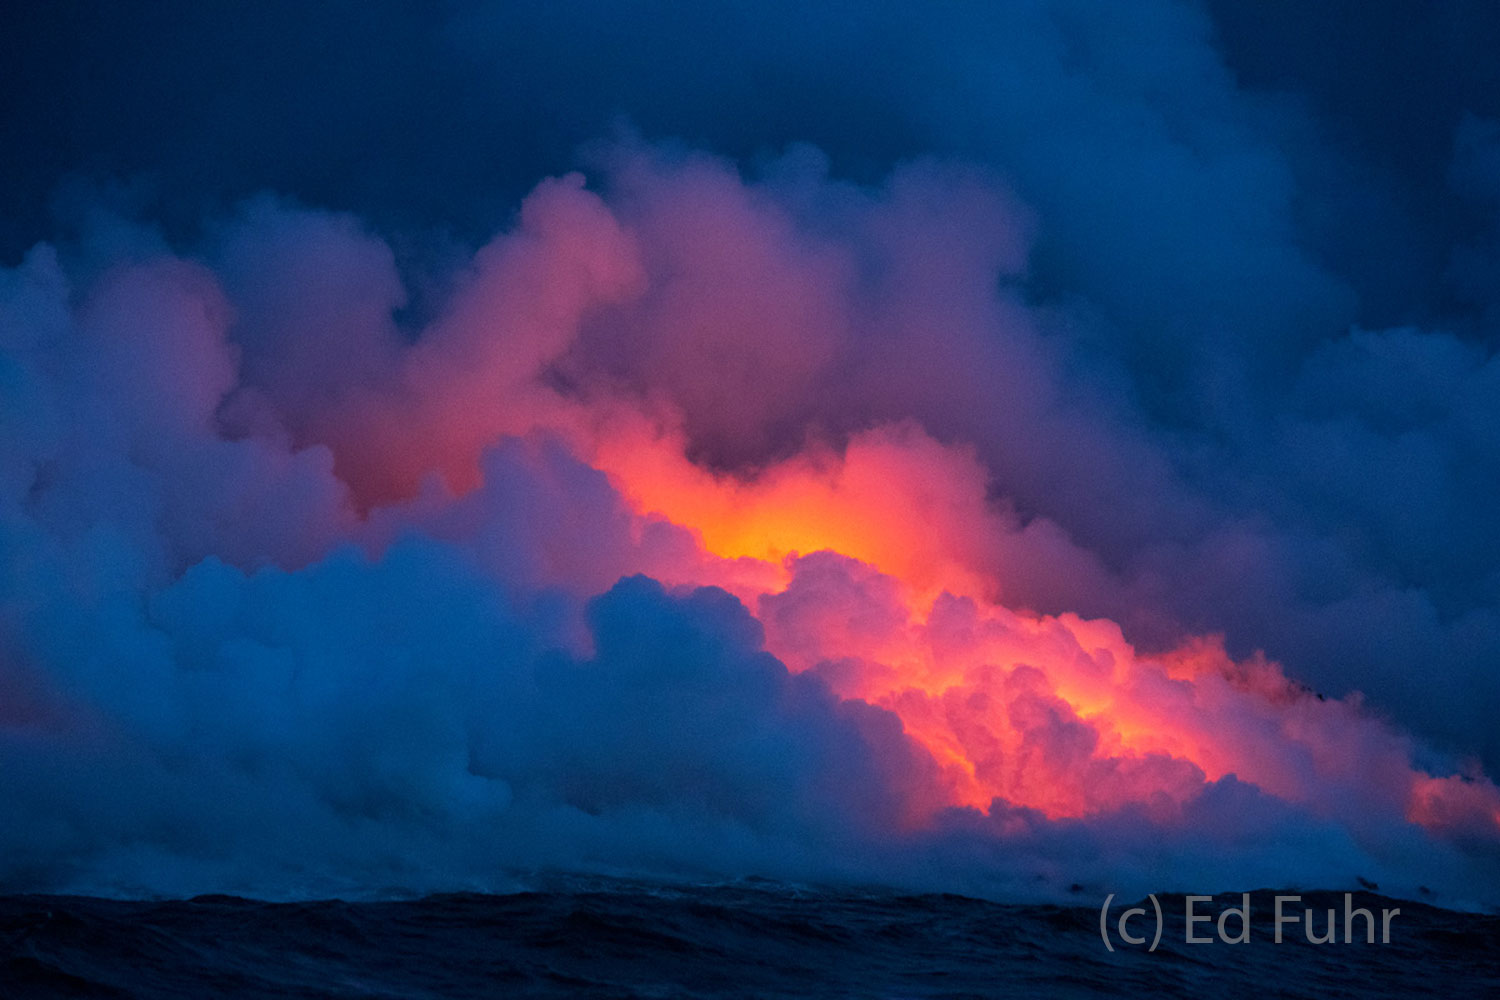 Molten flow of lava into the sea